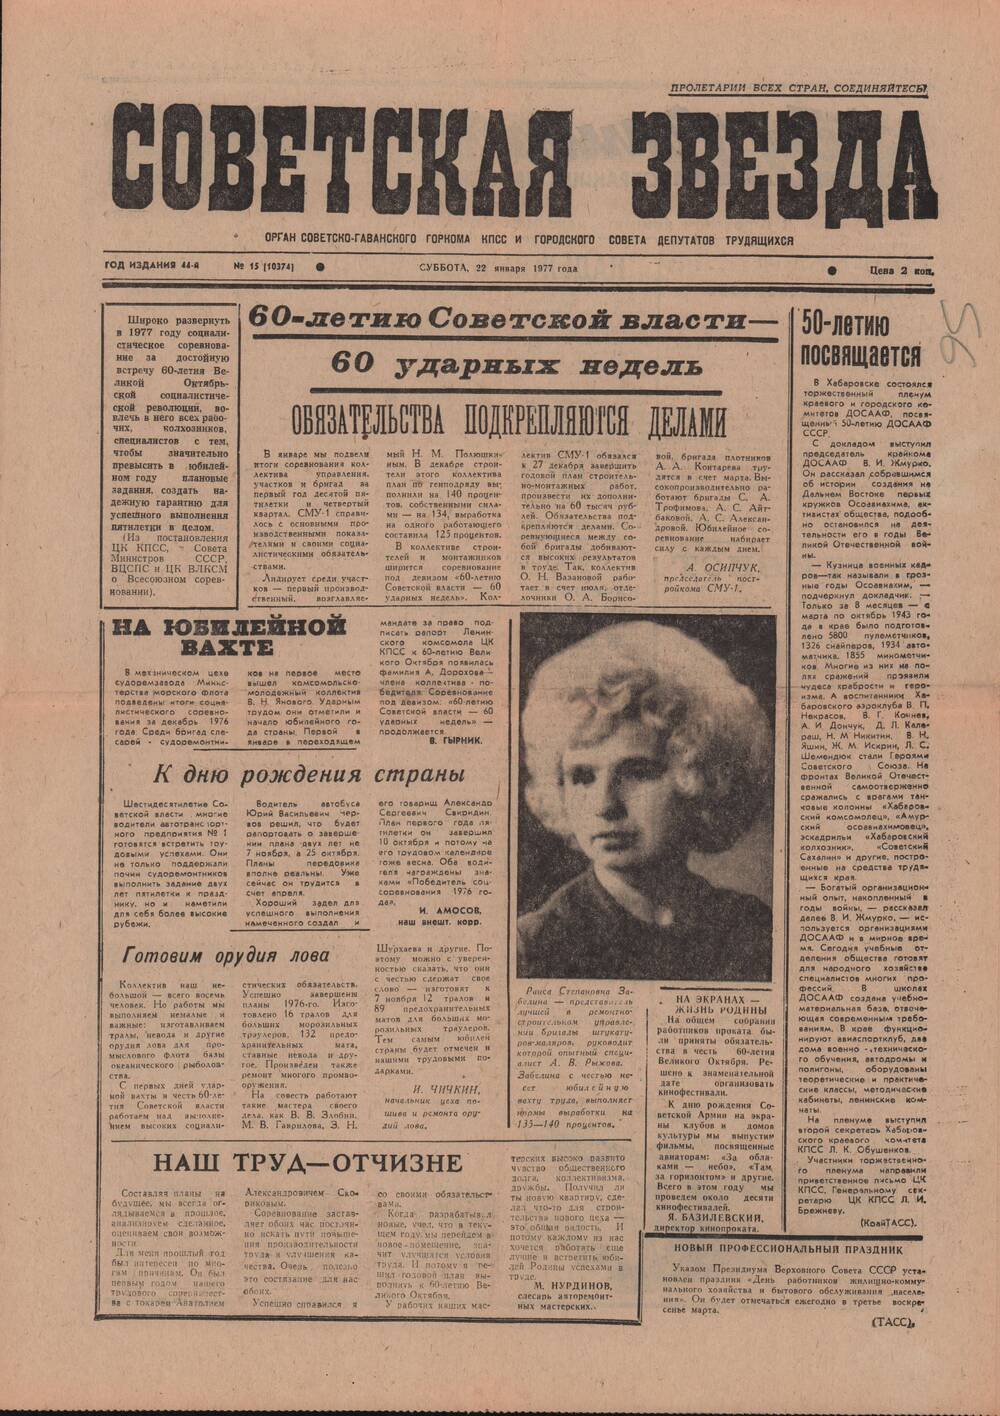 Газета «Советская звезда» № 15 от 22 января 1977 г. о работниках Дома быта.